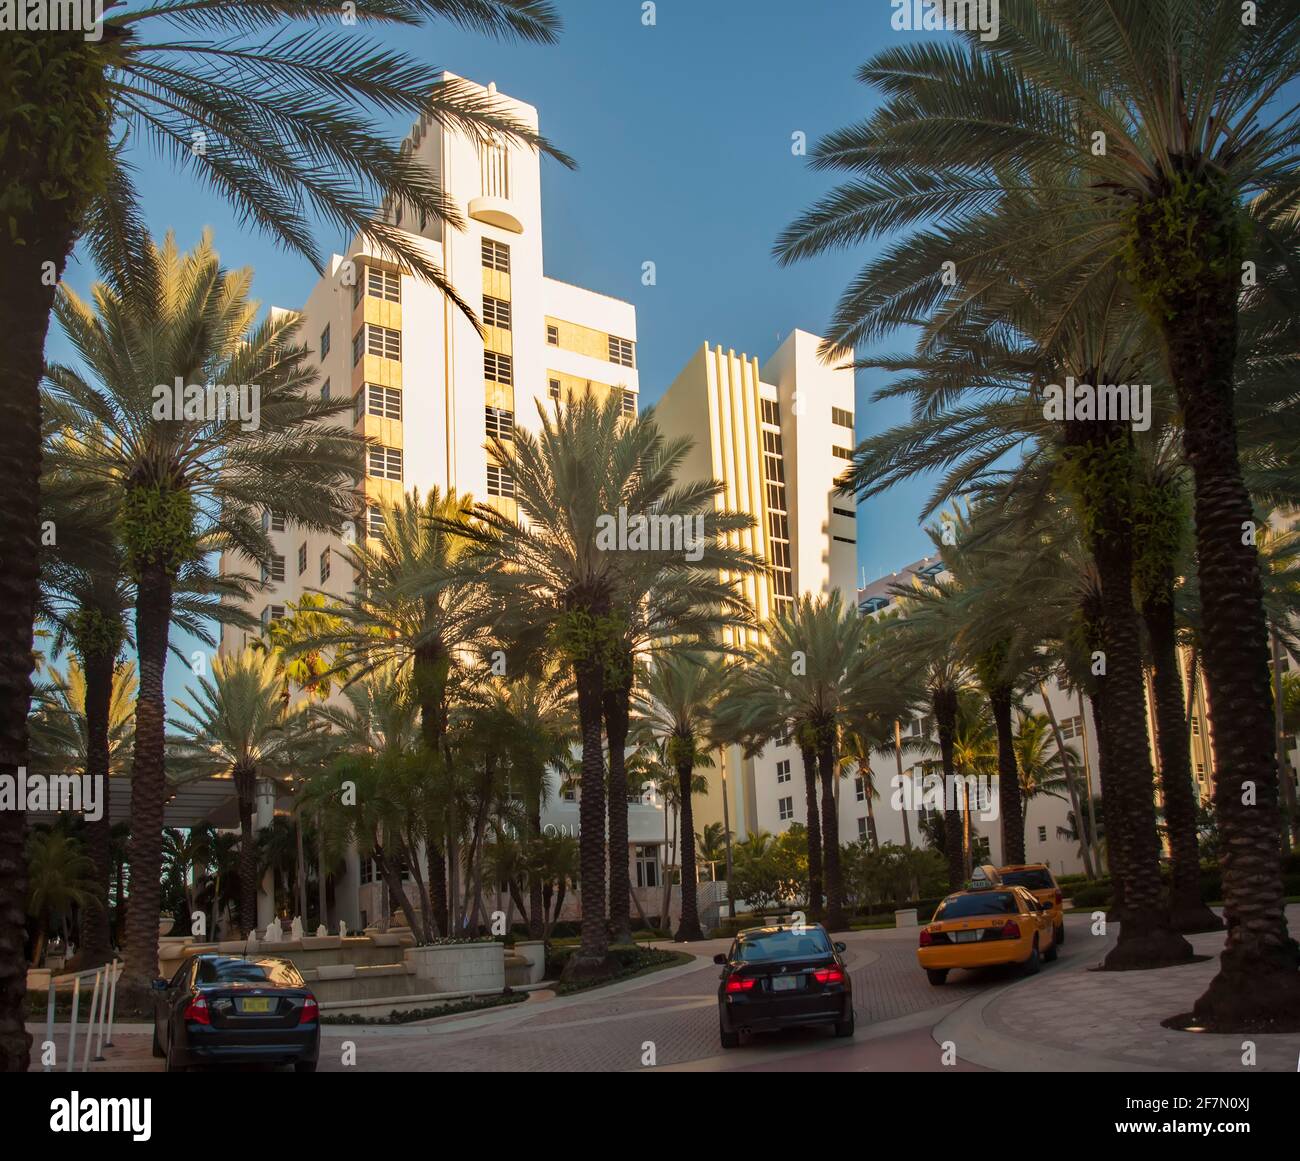 St Moritz art deco hotel, South Beach, Miami, Florida, USA Stock Photo